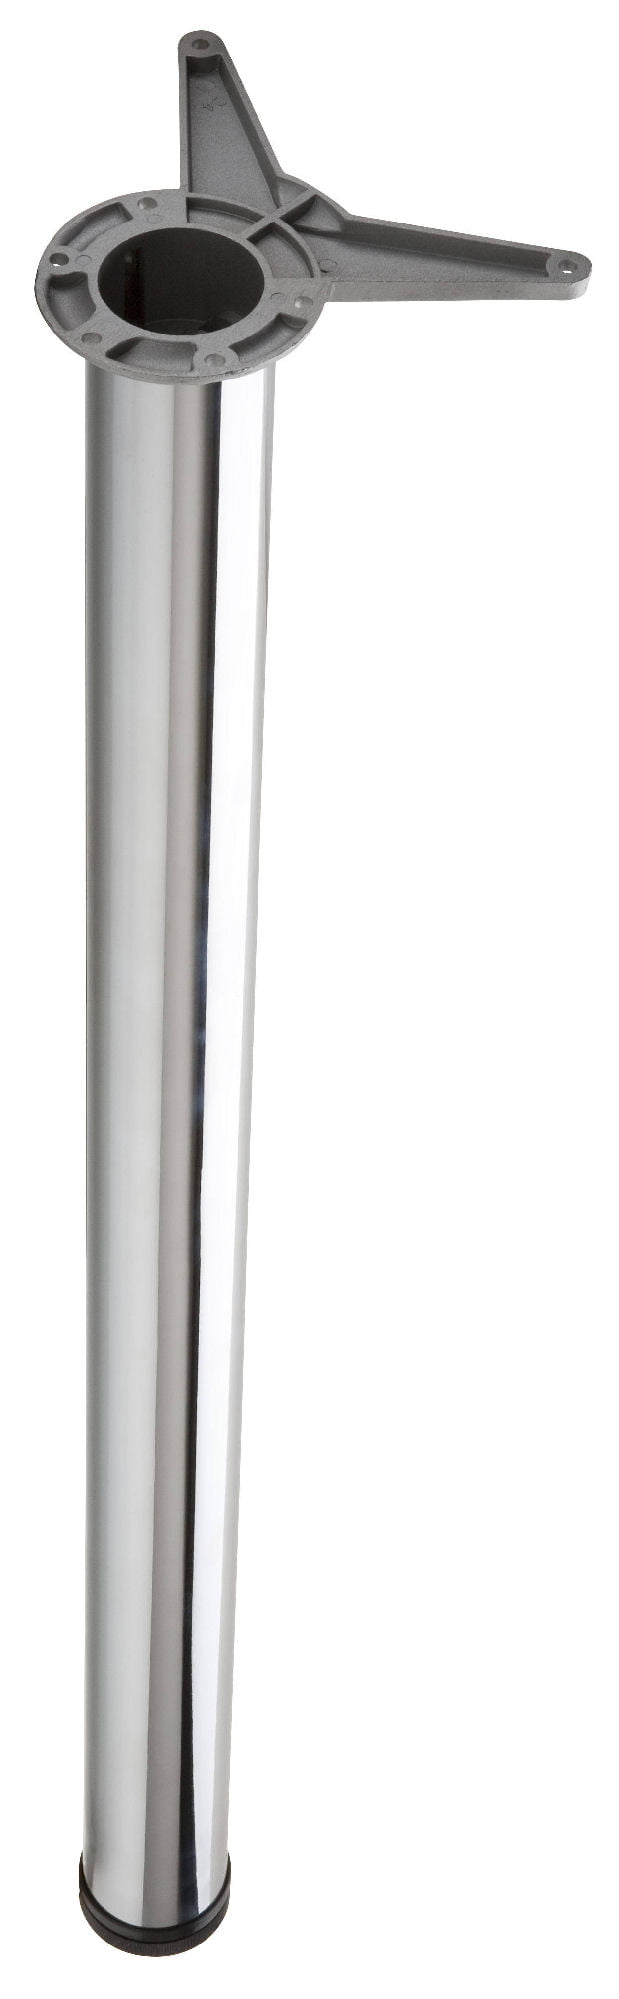 Table Leg Metal Ø 80mm Height 870mm Version Chrome Matt möbelfuss Table Stamp 